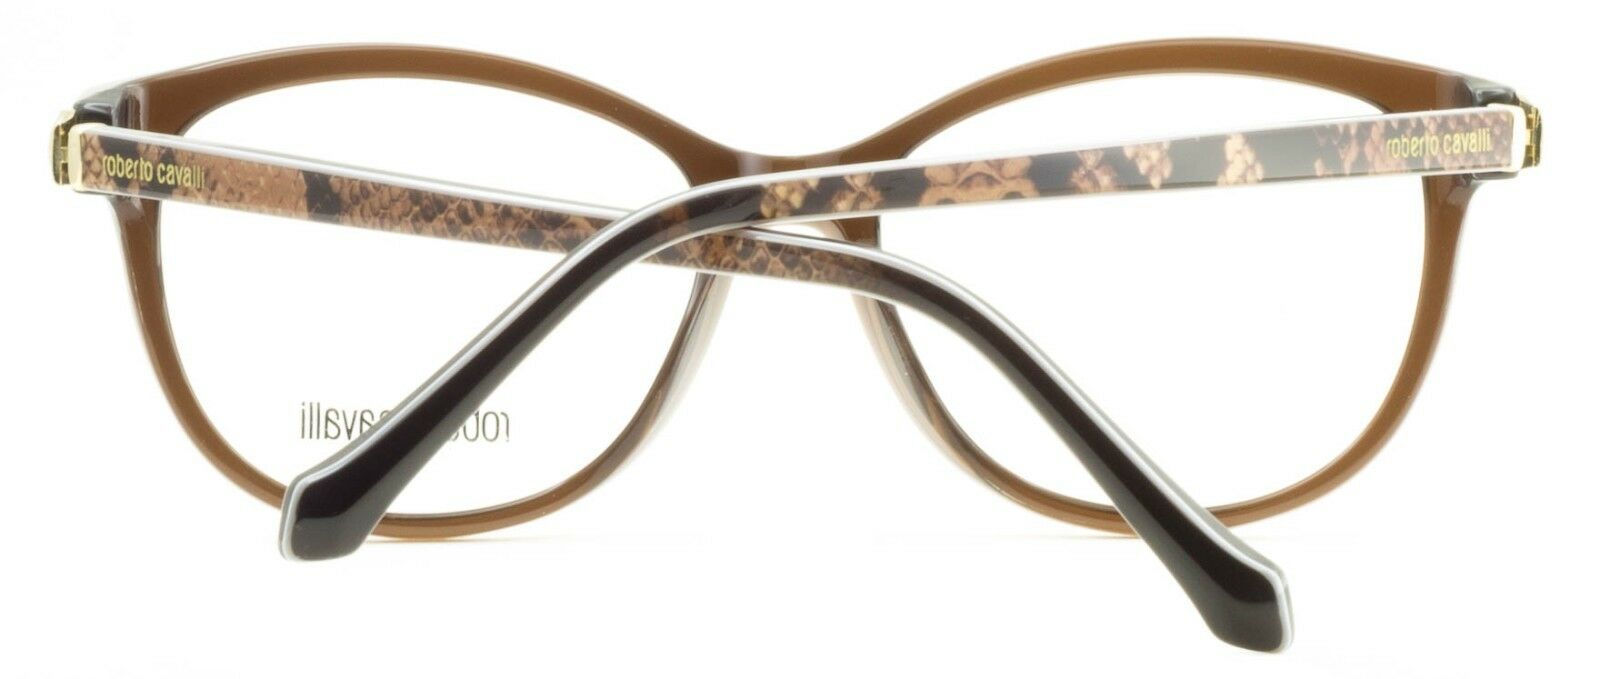 ROBERTO CAVALLI Ras 941 050 RX Optical FRAMES NEW Glasses Eyewear Italy - BNIB